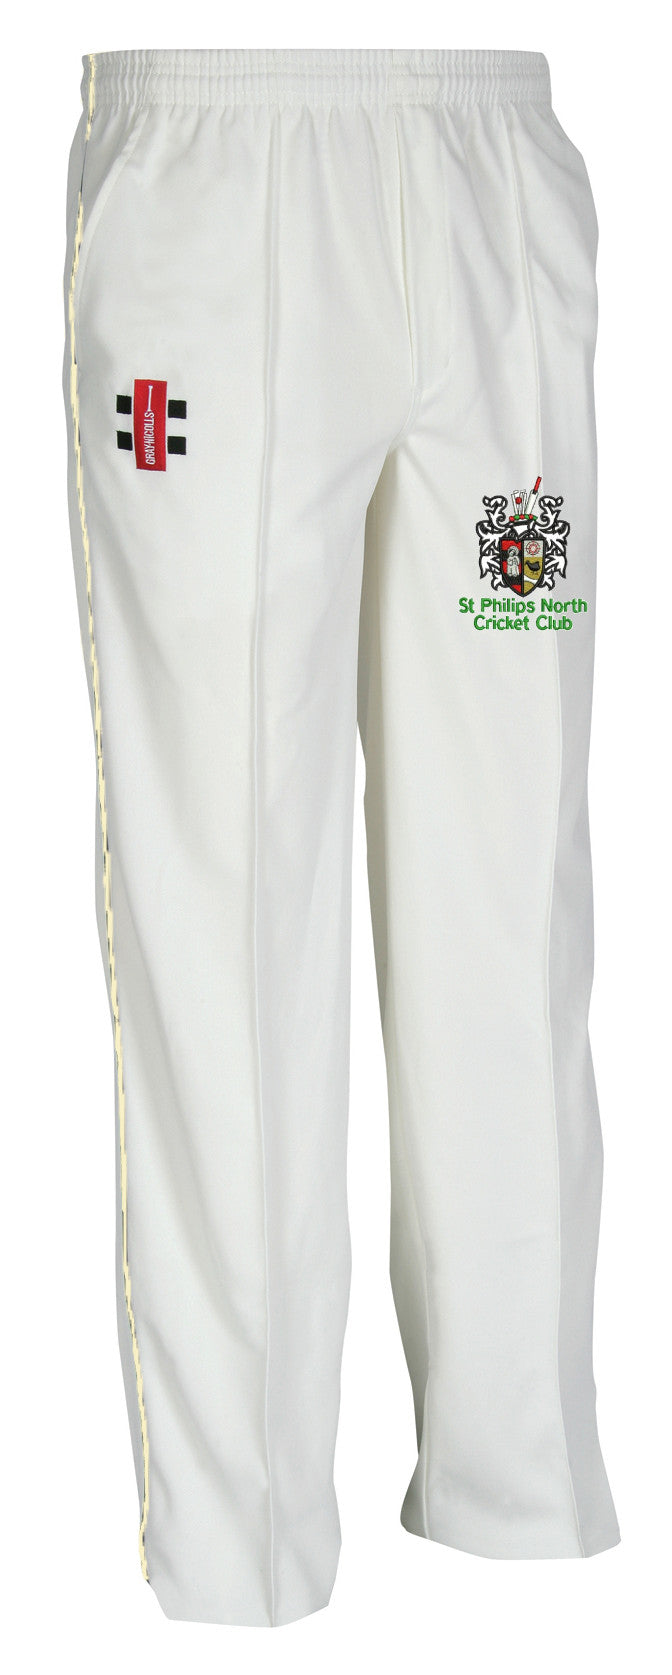 St Philips North CC Matrix Cricket Trouser